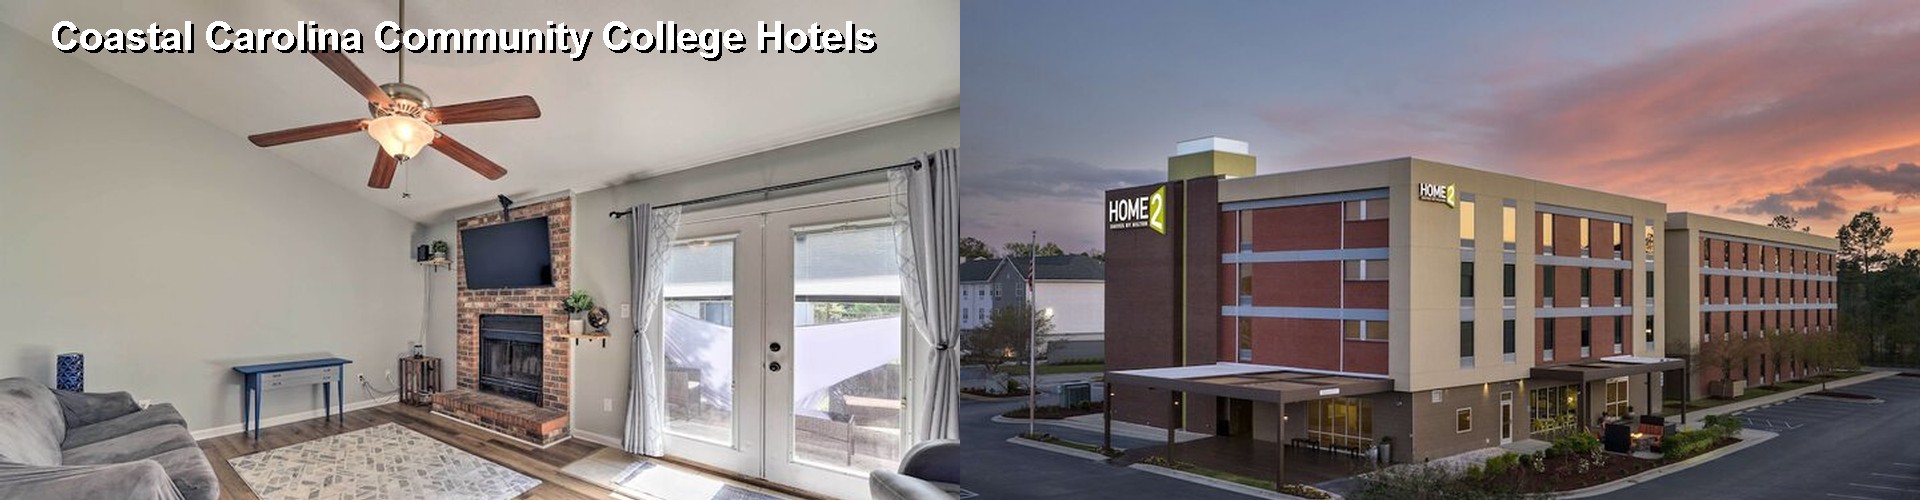 2 Best Hotels near Coastal Carolina Community College